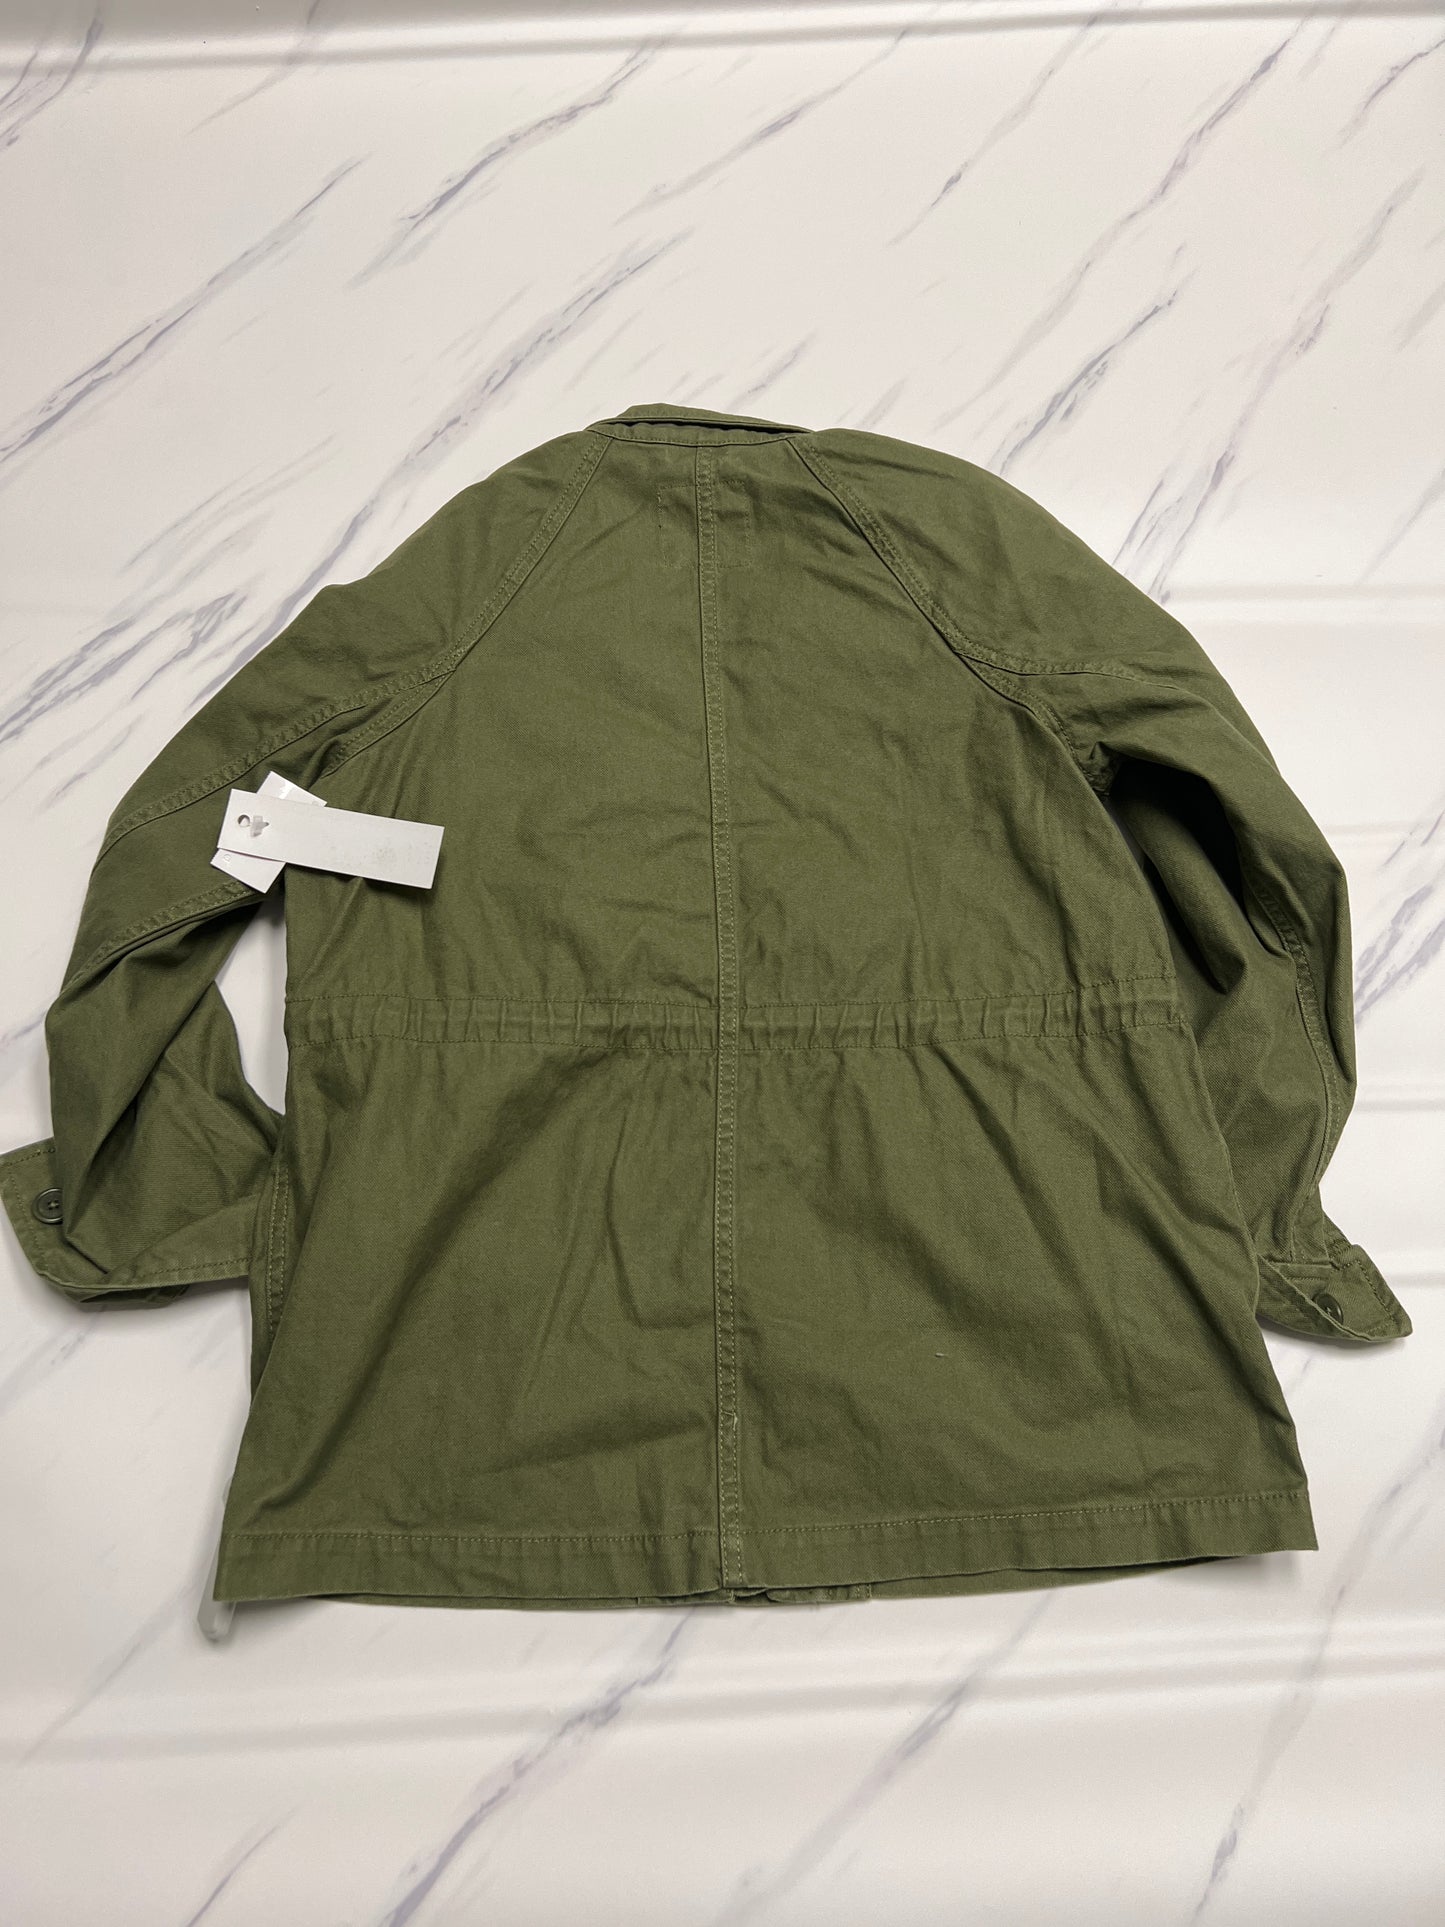 Jacket Utility By Madewell  Size: Xs